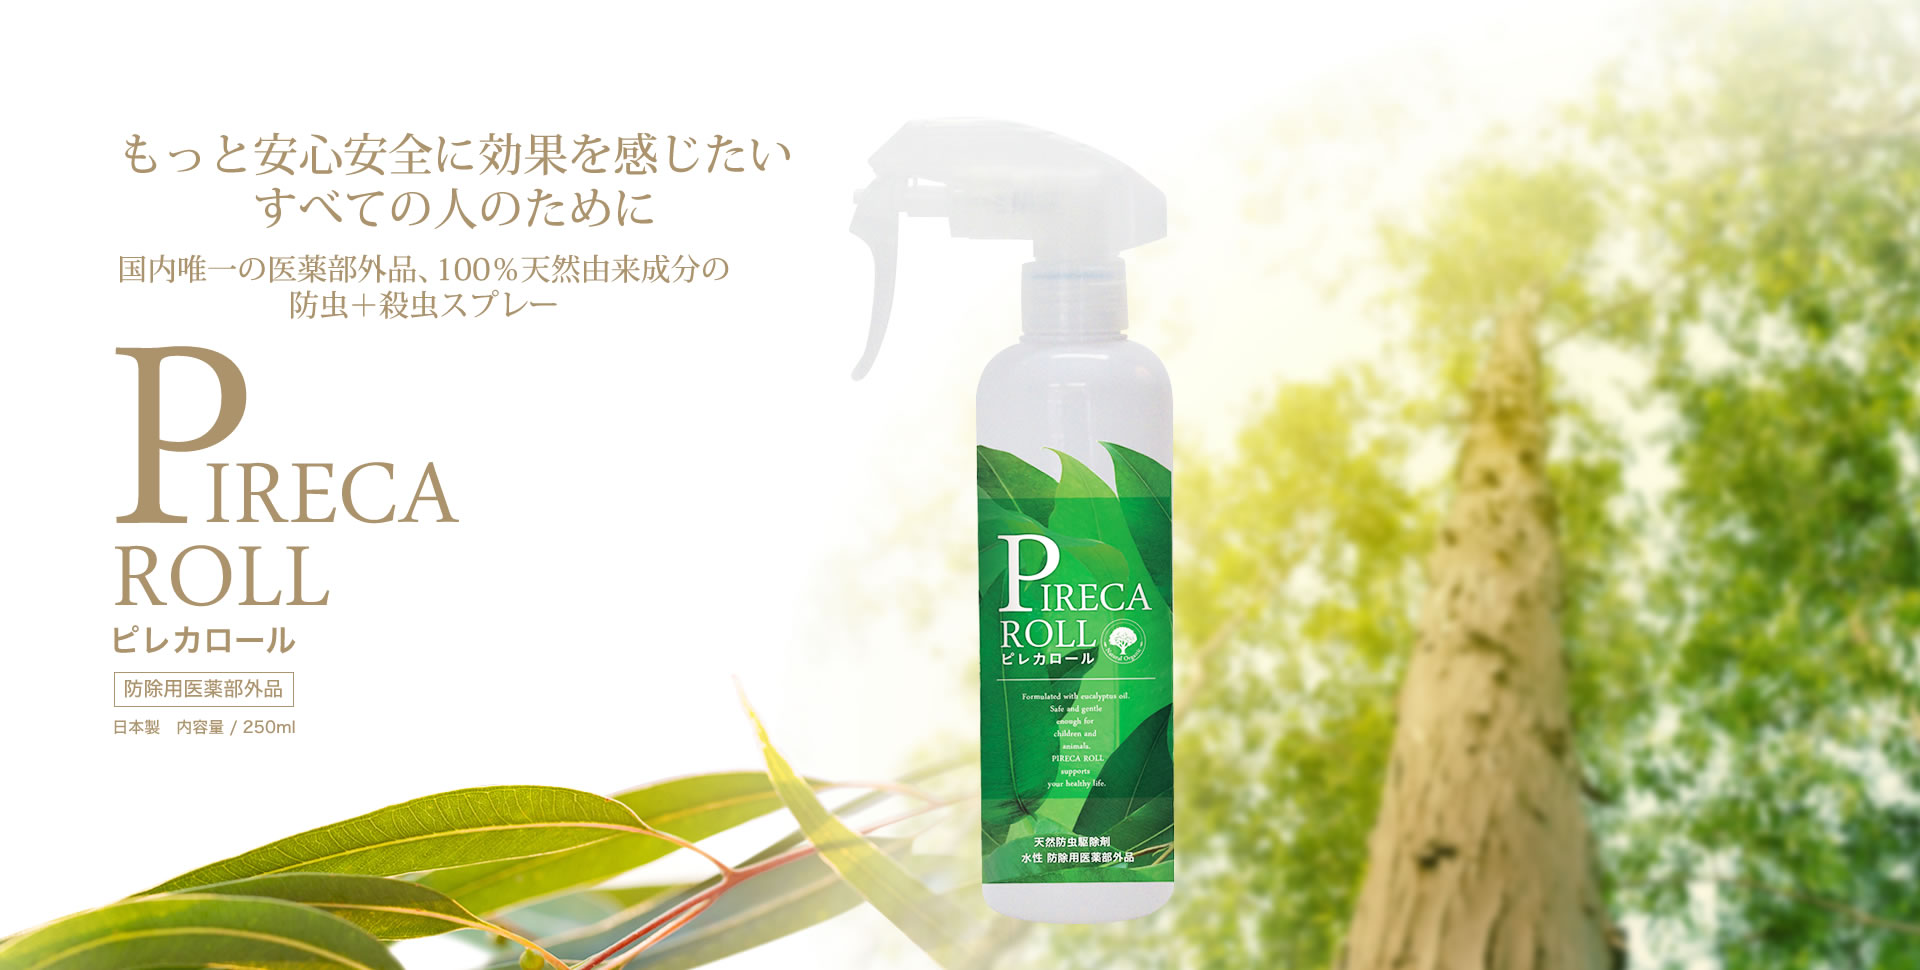 PIRECA ROLL ピレカロール 防除用医薬部外品 日本製  内容量 / 250ml